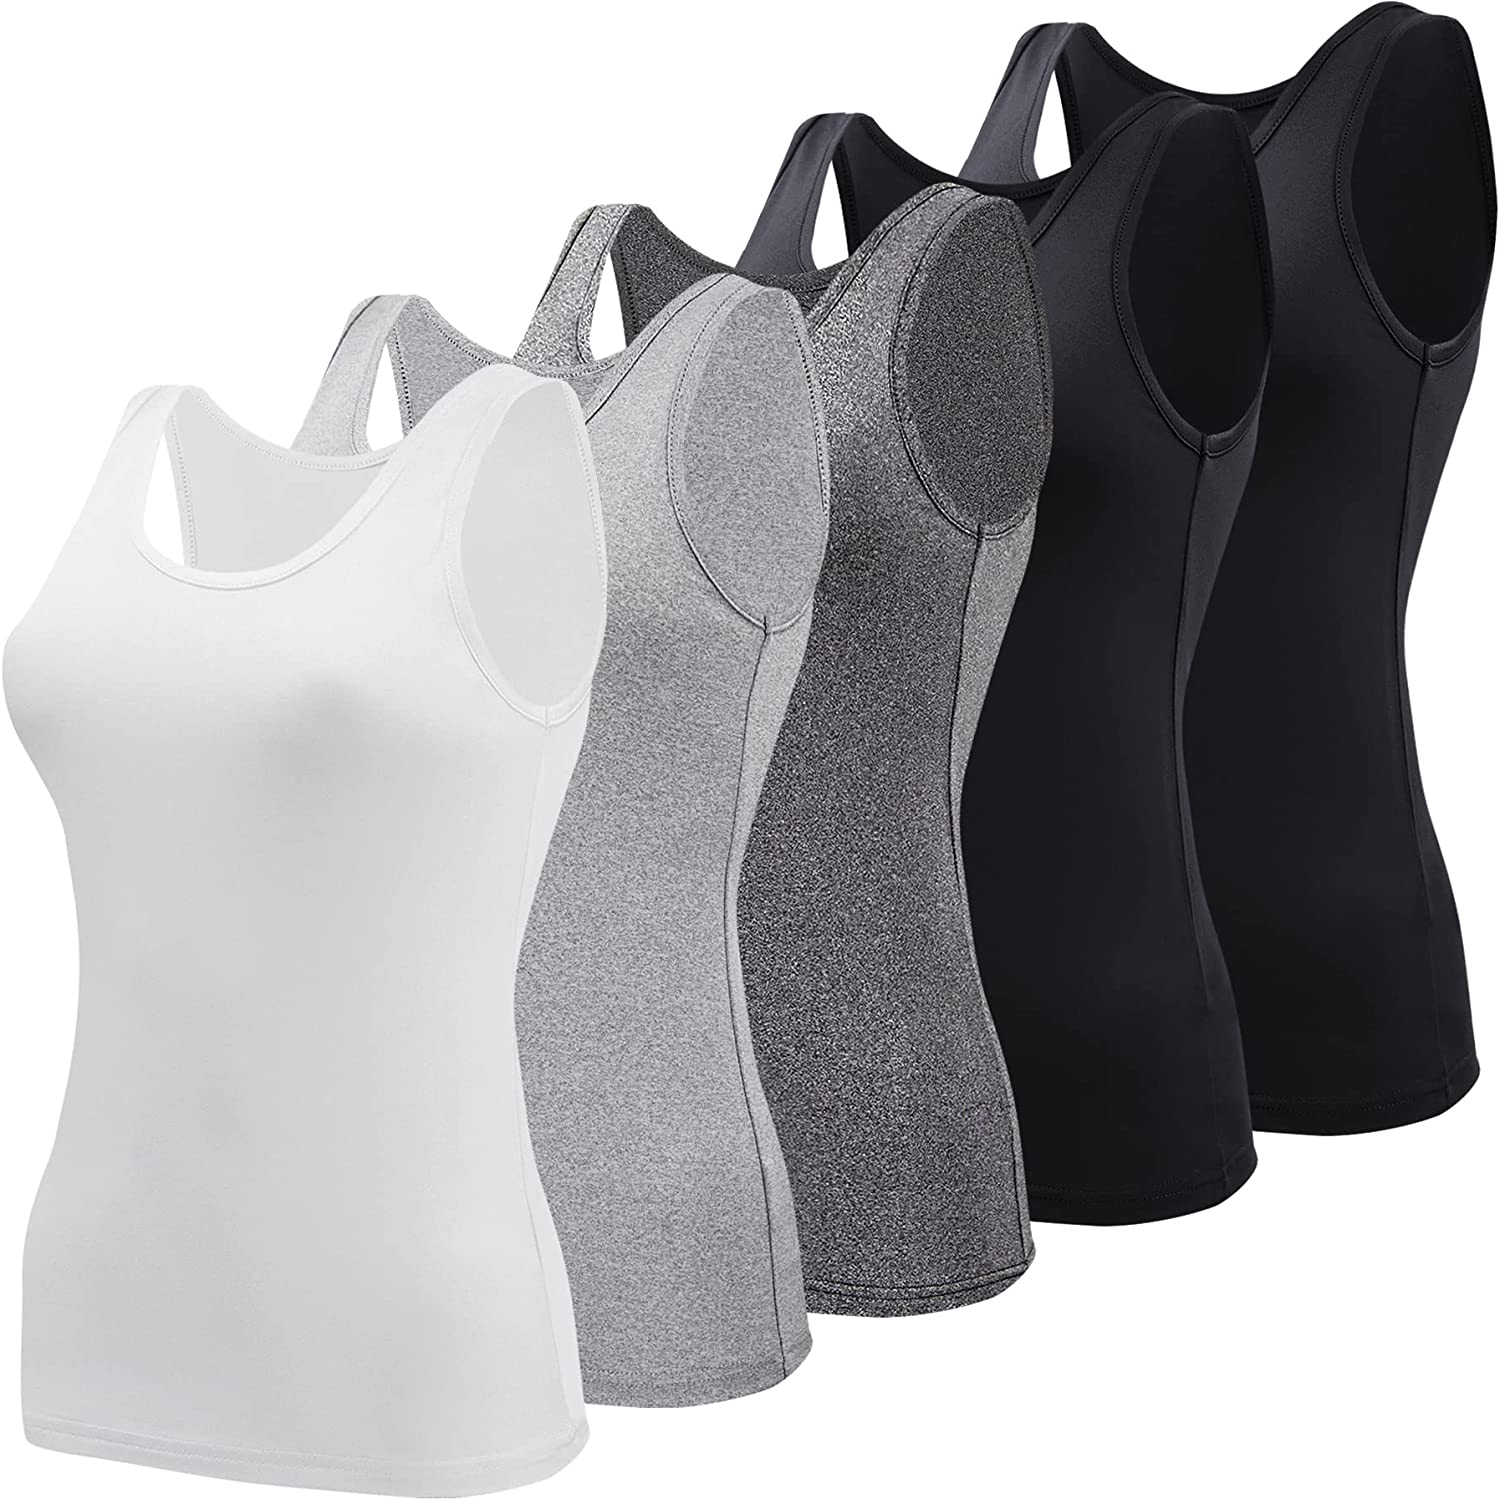 BQTQ 5 Pcs Basic Tank Tops For Women Undershirt Tank Top Sleeveless Under  Shirts